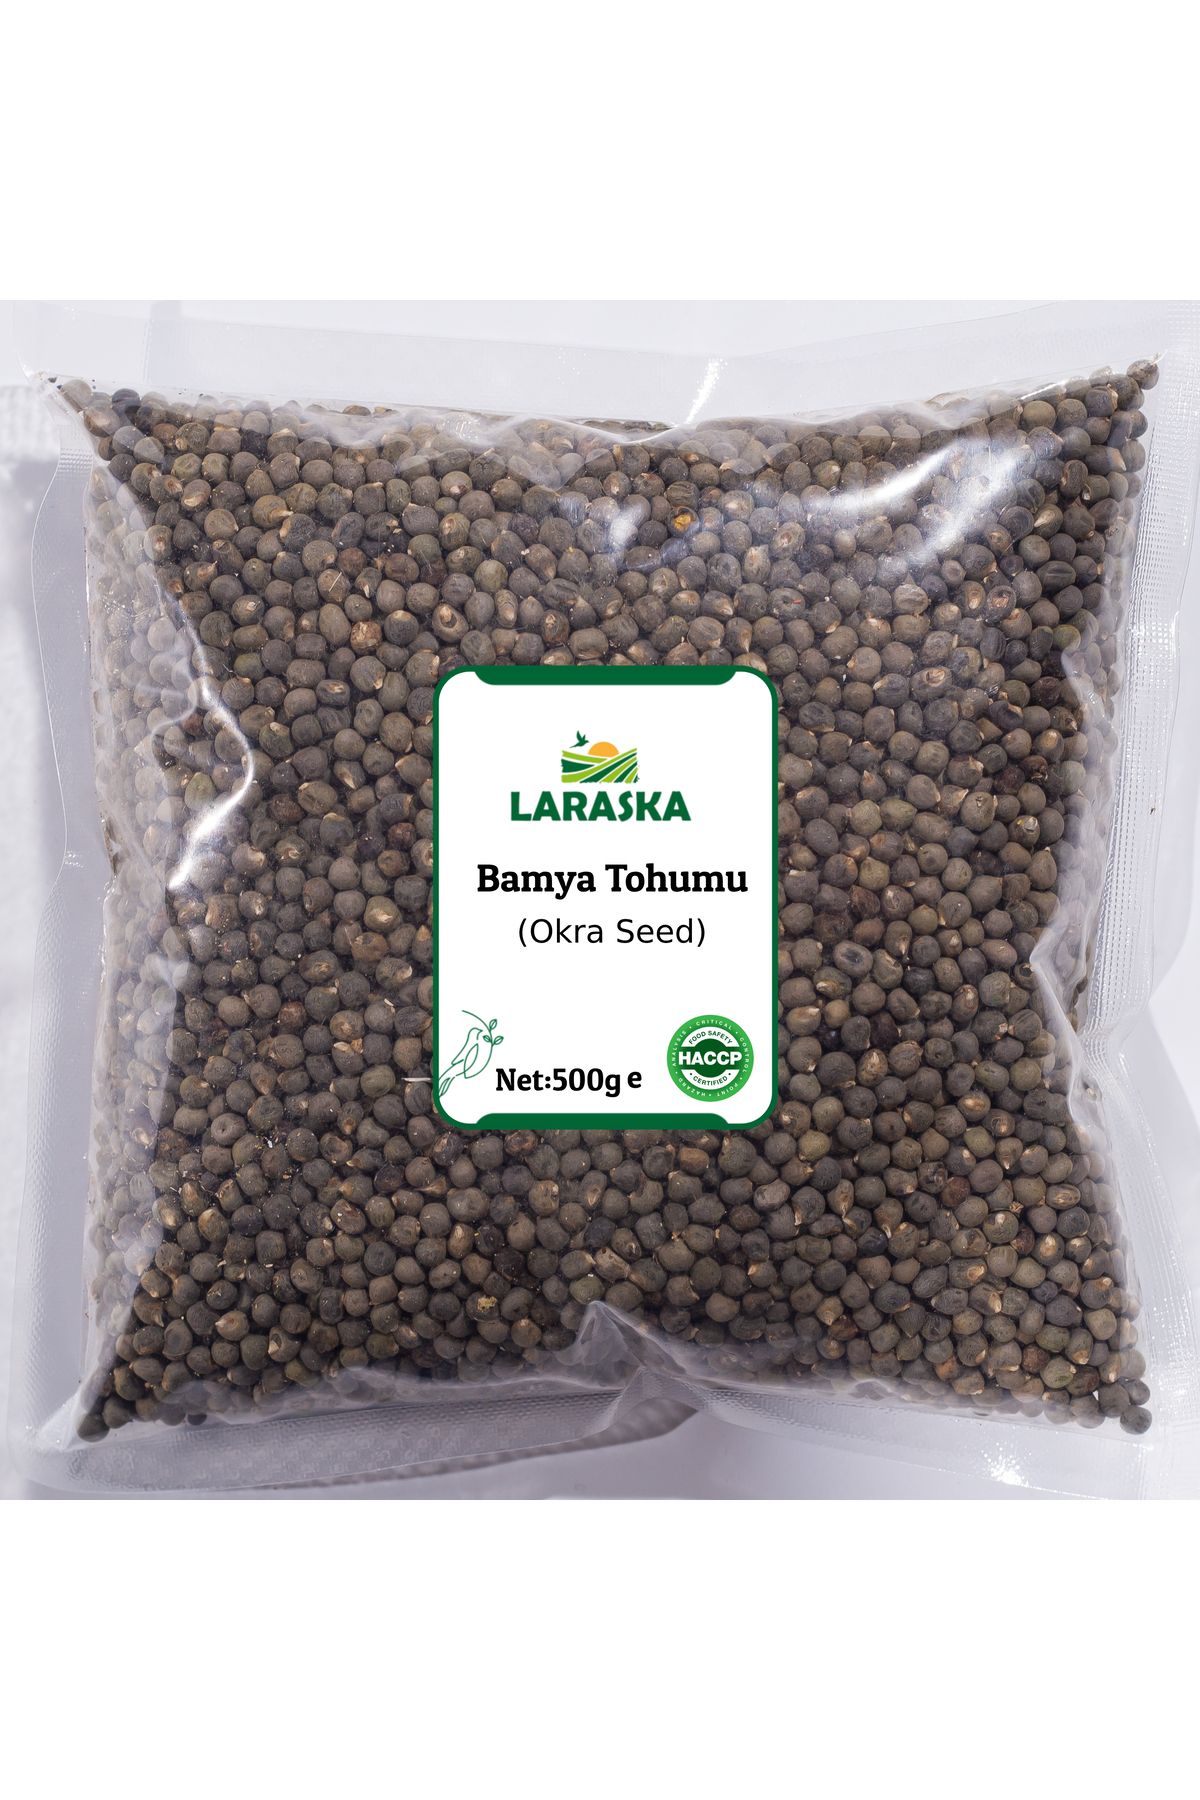 Laraska Bamya Tohumu 500g - Okra Seed 500g